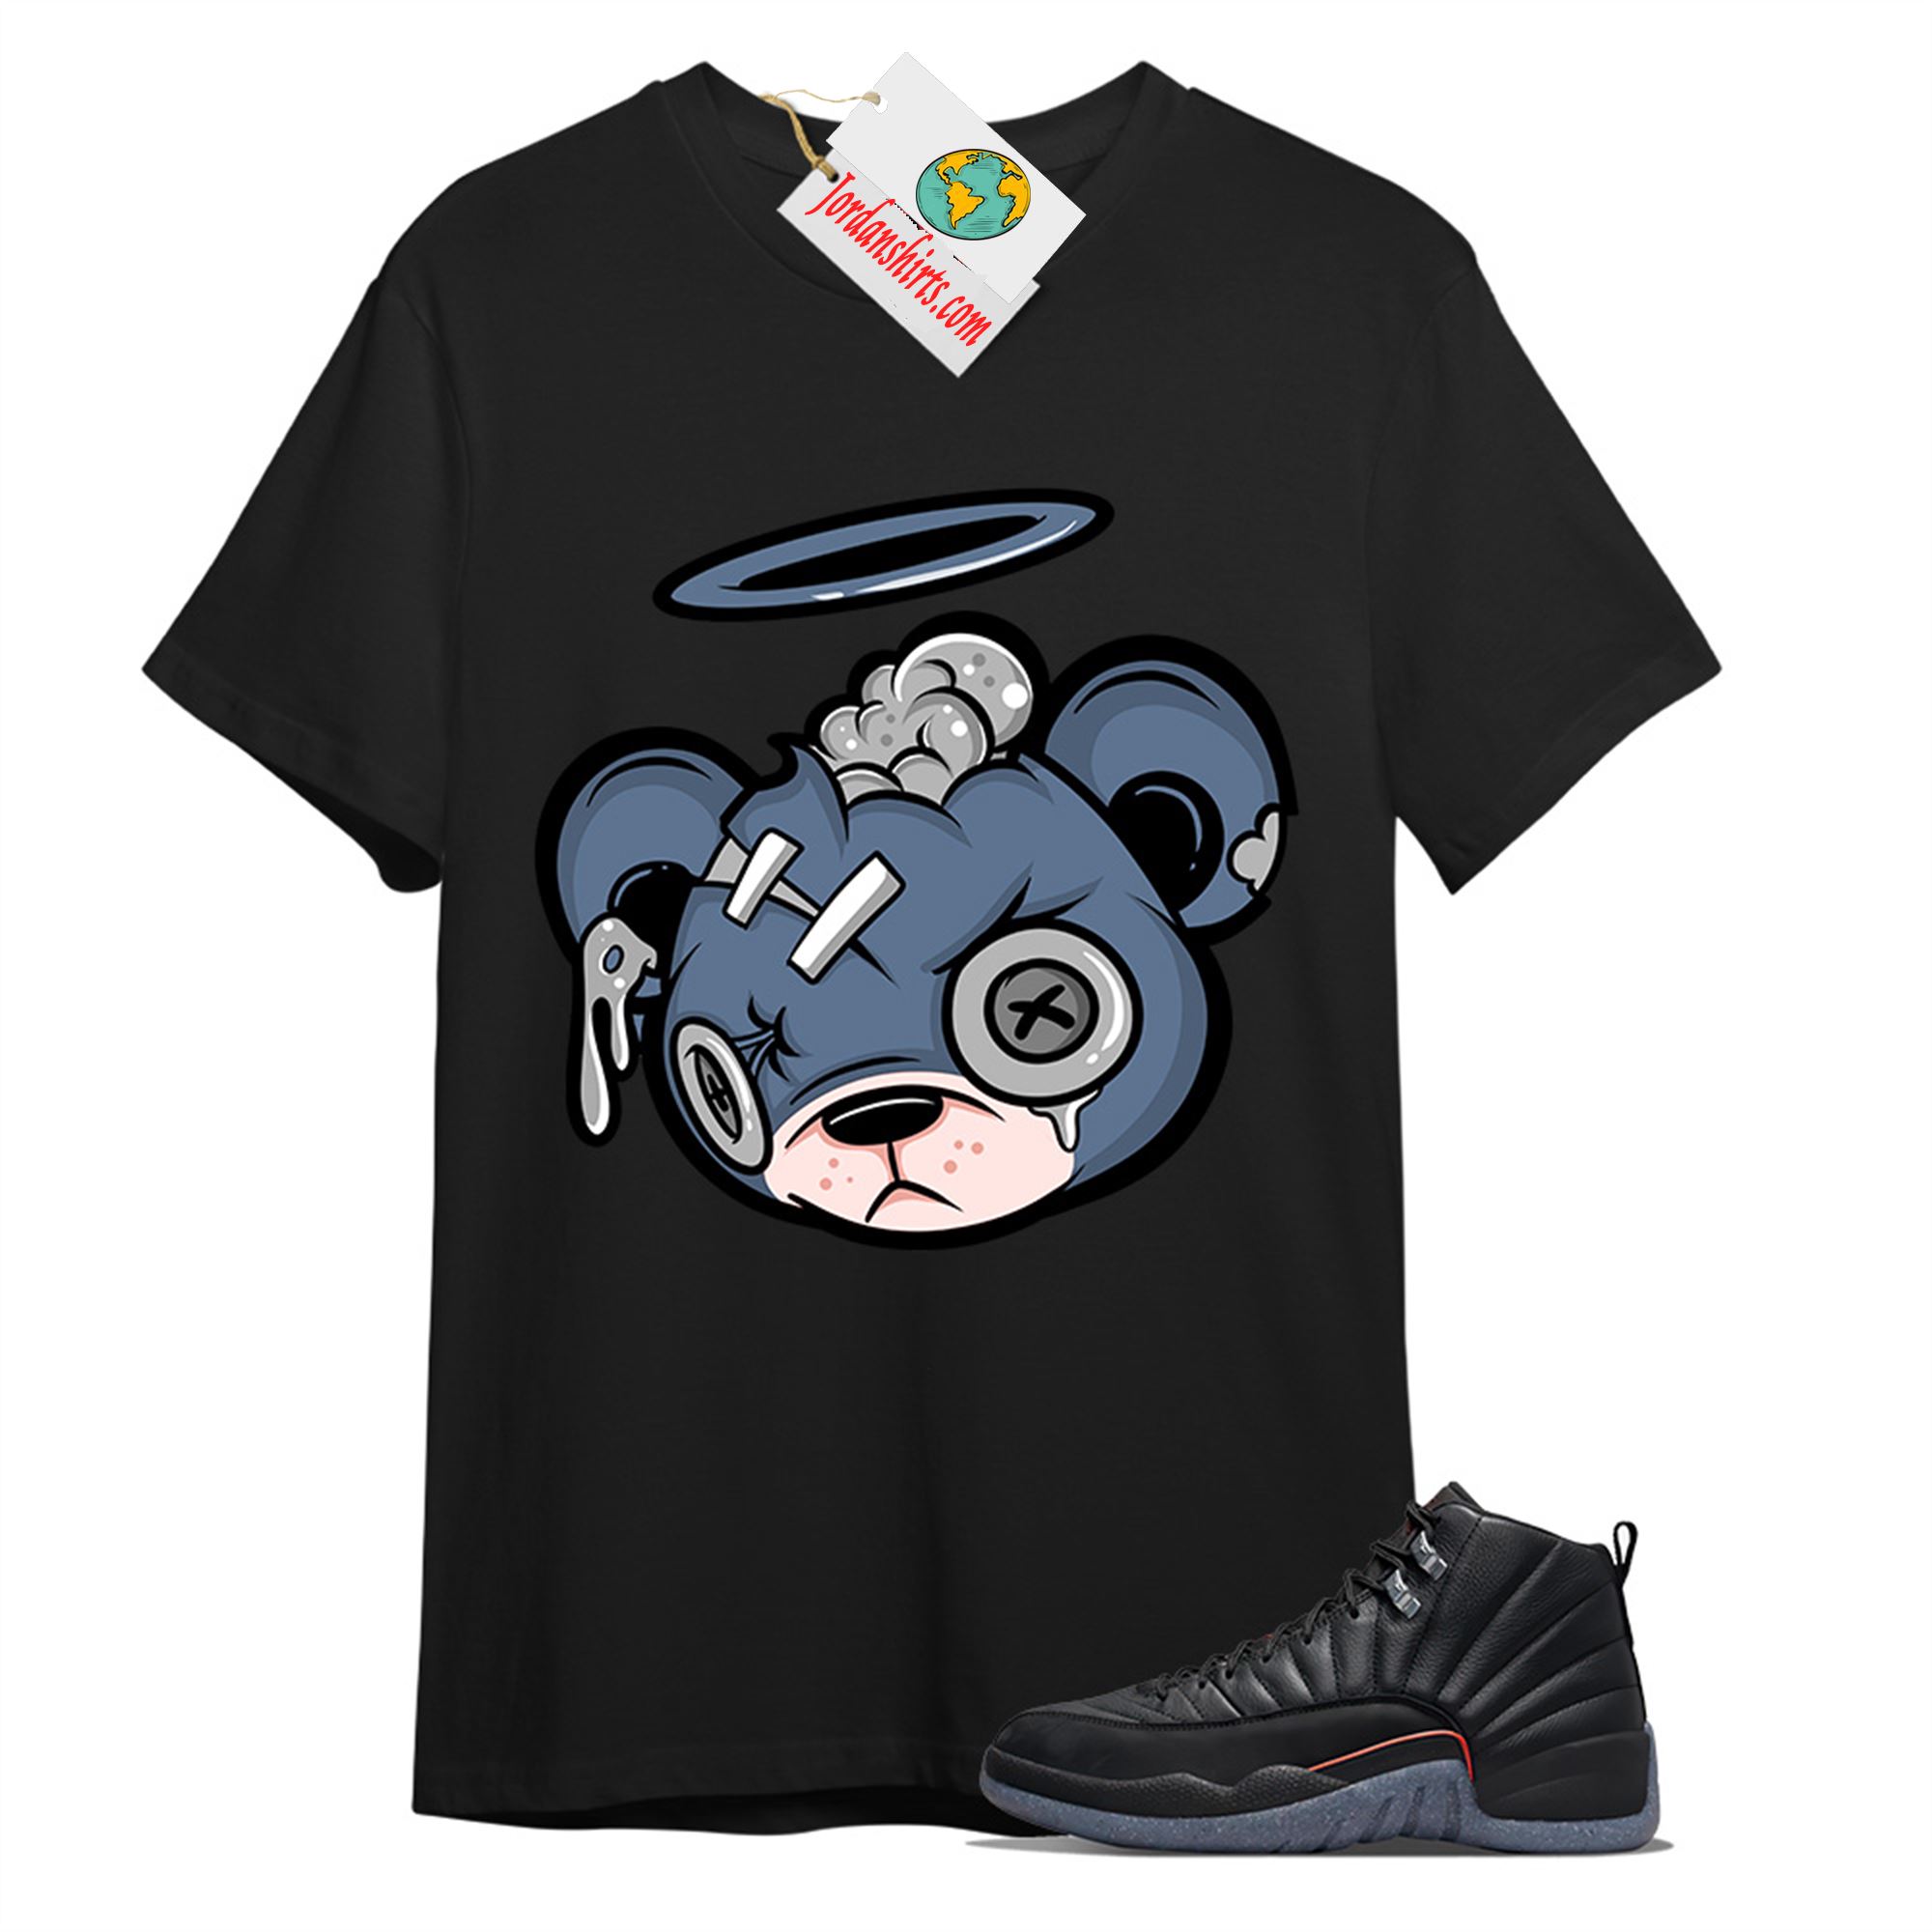 Jordan 12 Shirt, Teddy Bear With Angel Ring Black T-shirt Air Jordan 12 Utility Grind 12s Size Up To 5xl